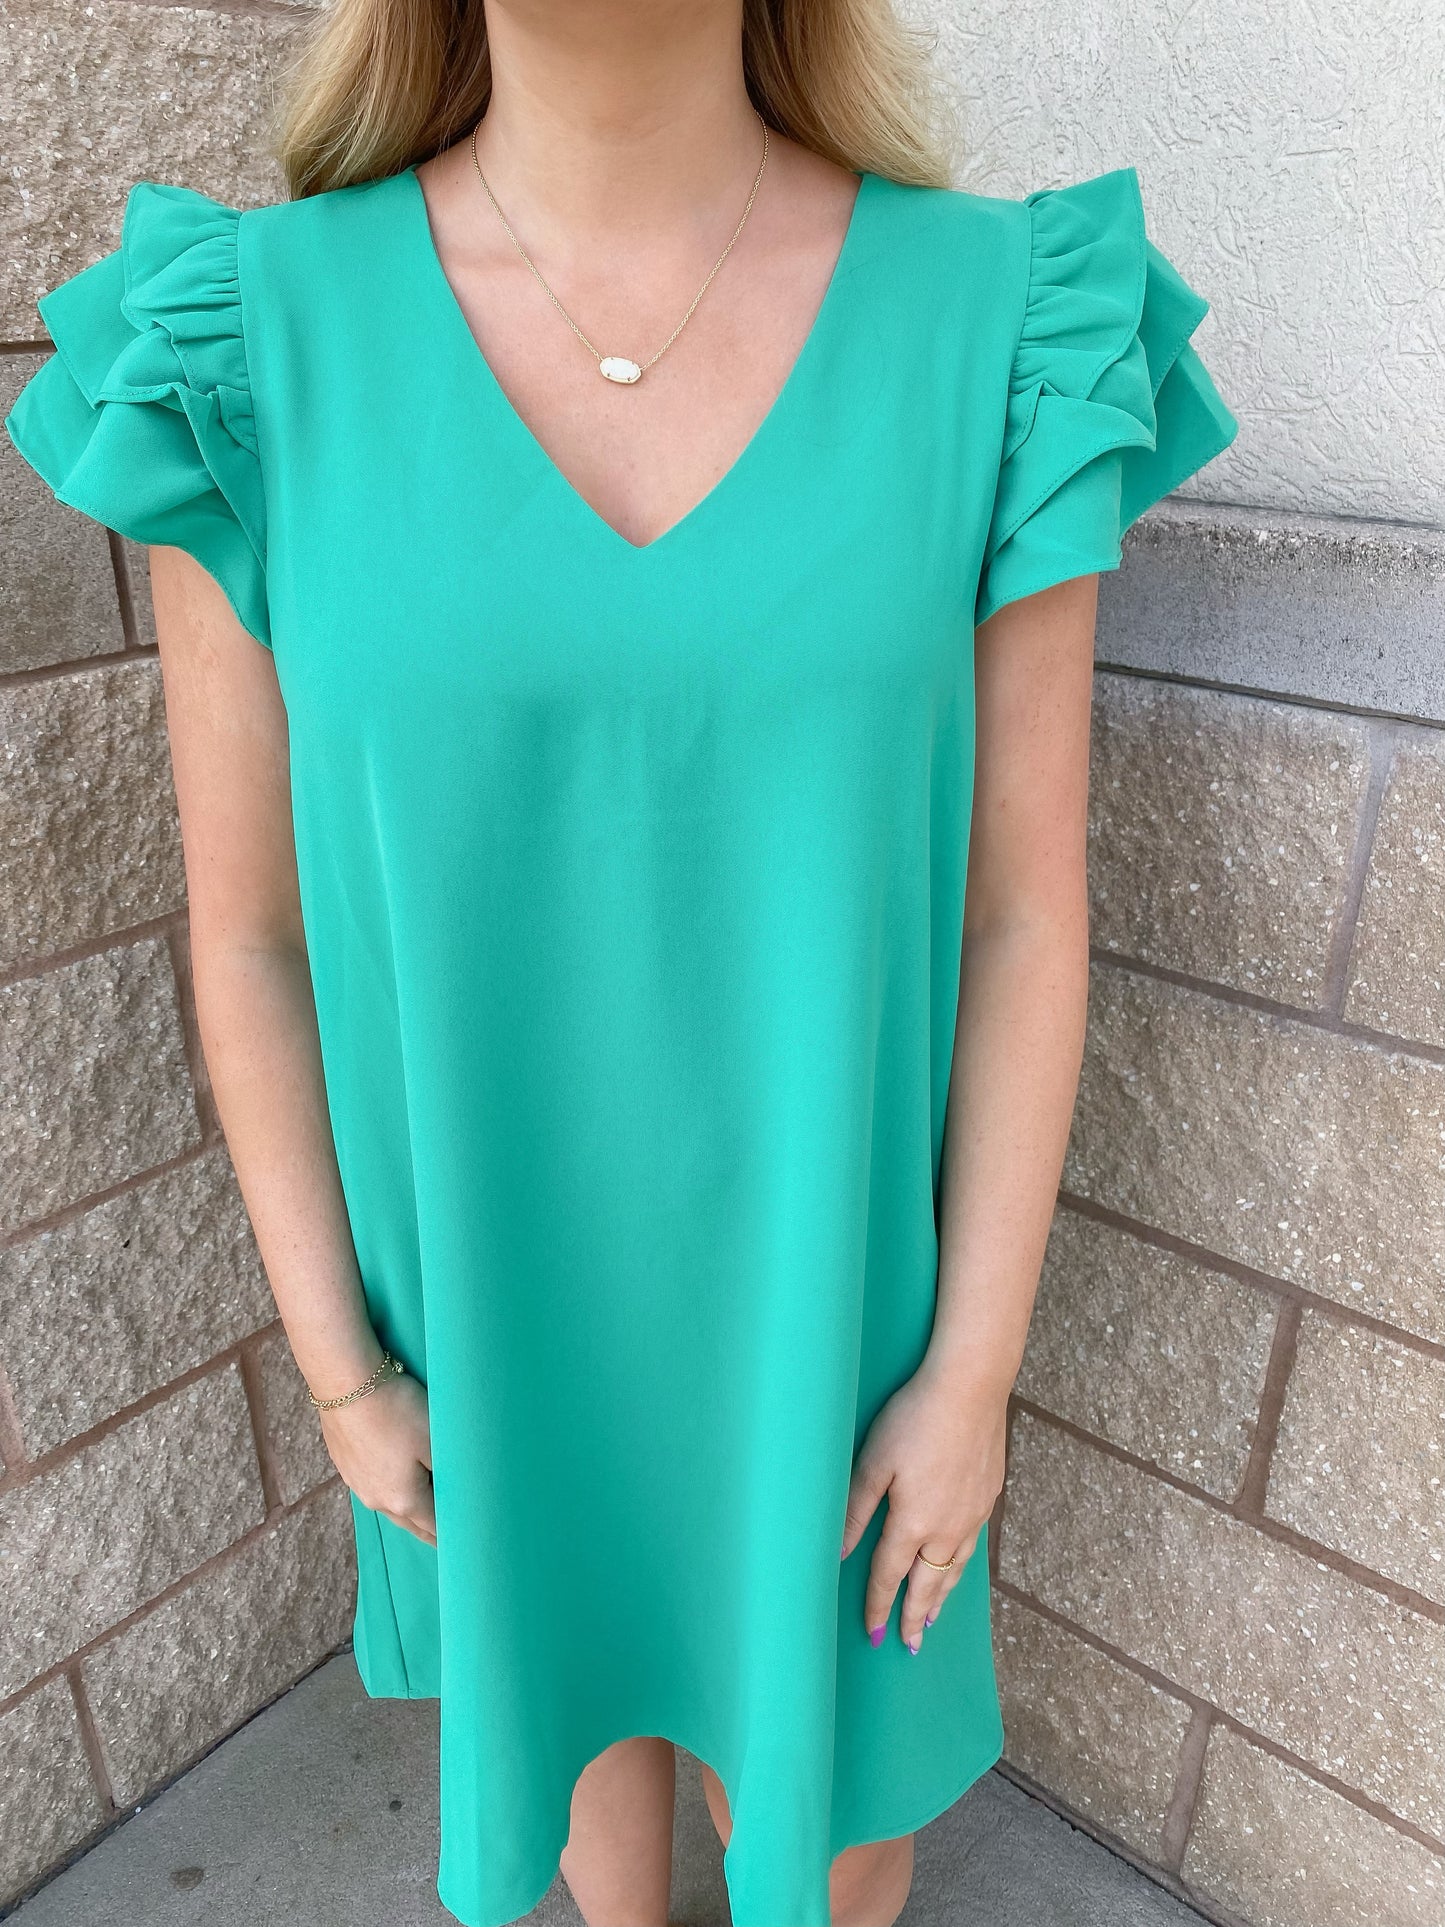 Simply Stunning Dress: Green